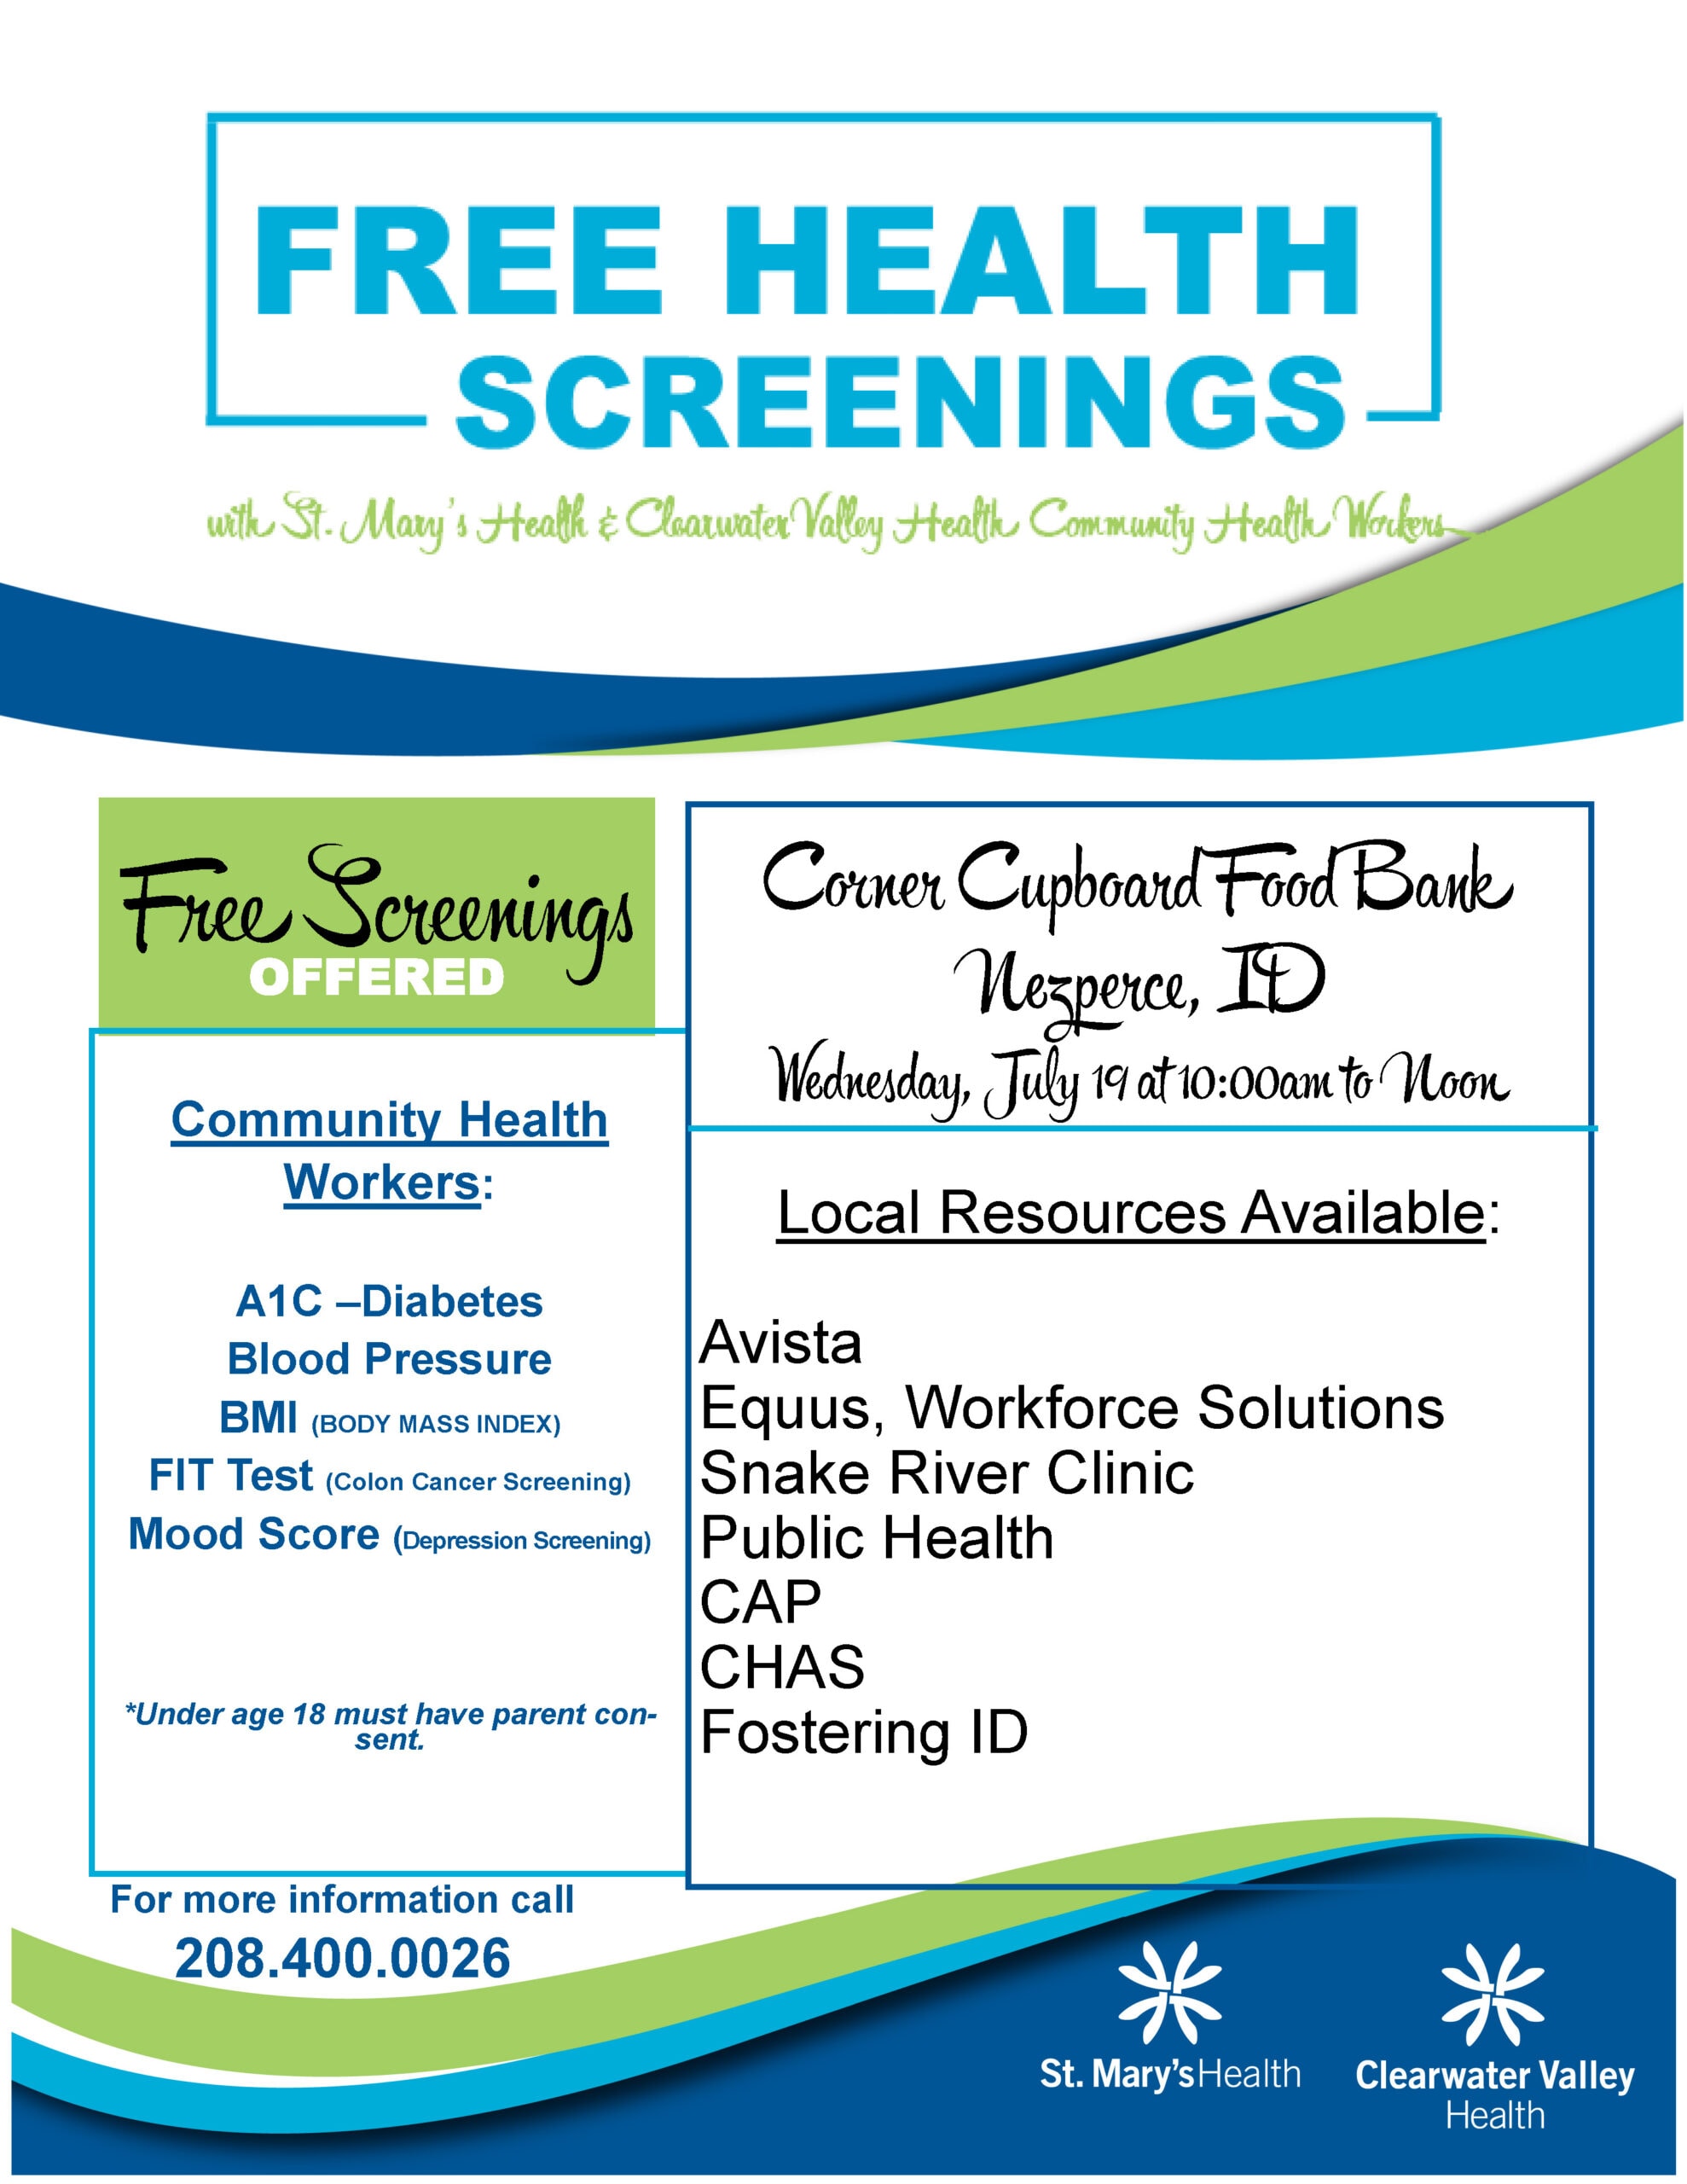 Nezperce IFB Resource Fair Health Screenngs Flyer